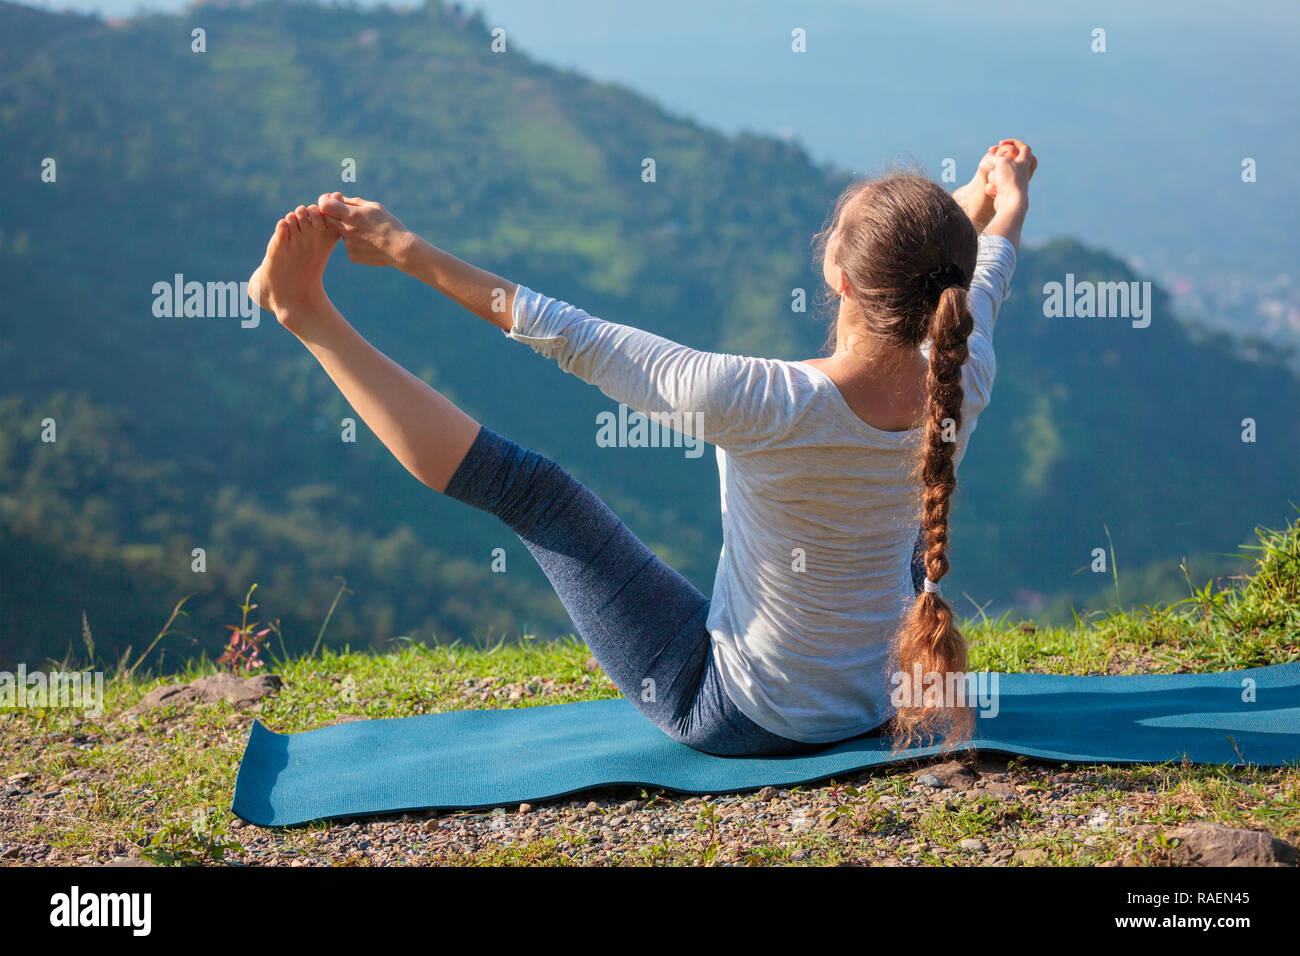 Yoga outdoors in mountains Stock Photo